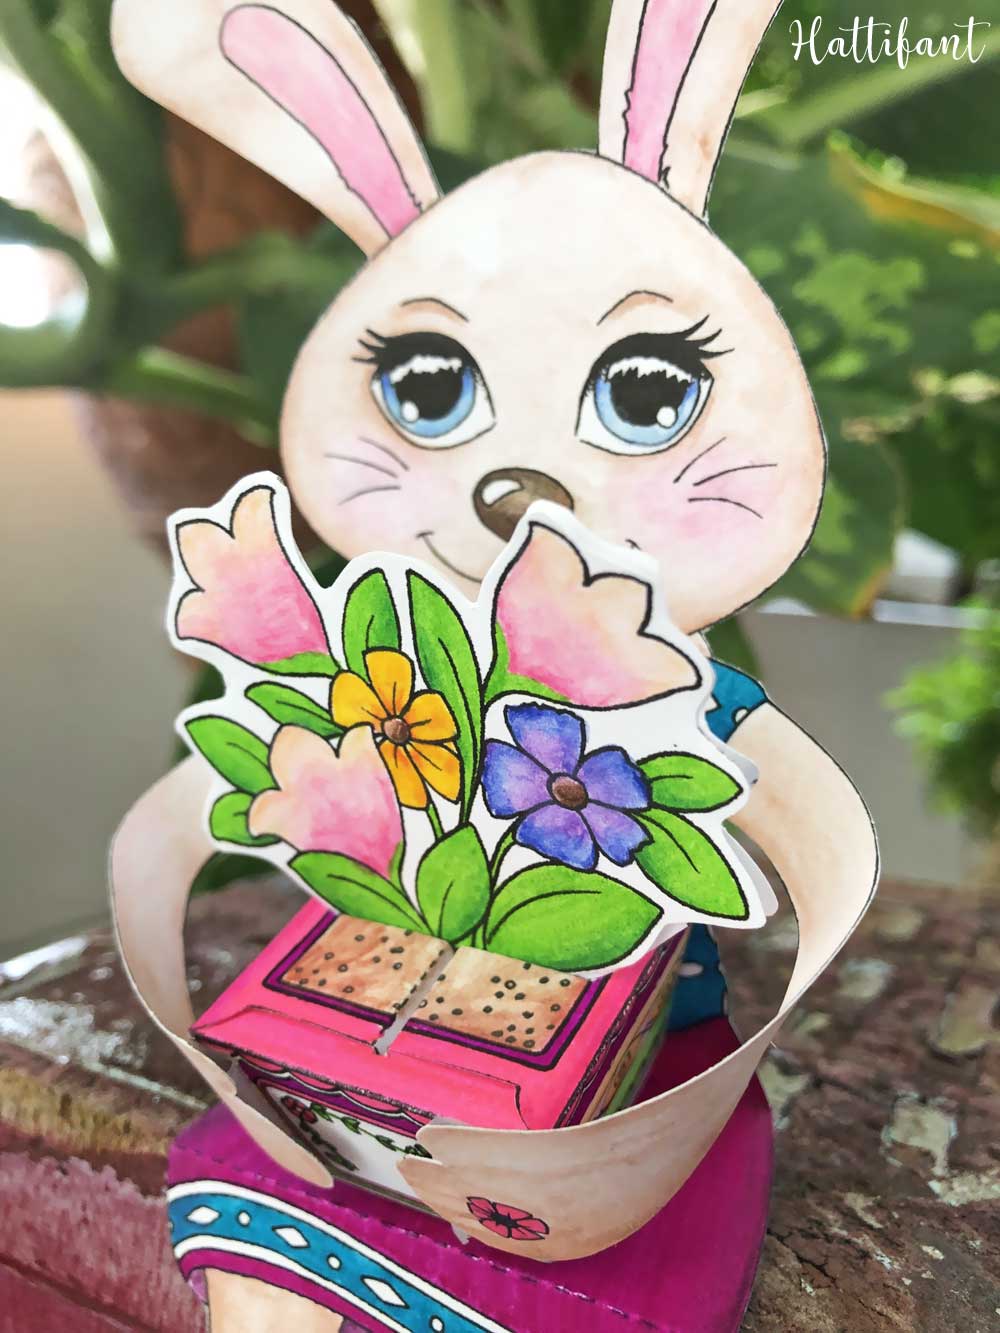 Hattifant's FLower Gift Boxes for Easter Bunny Shelf Sitters